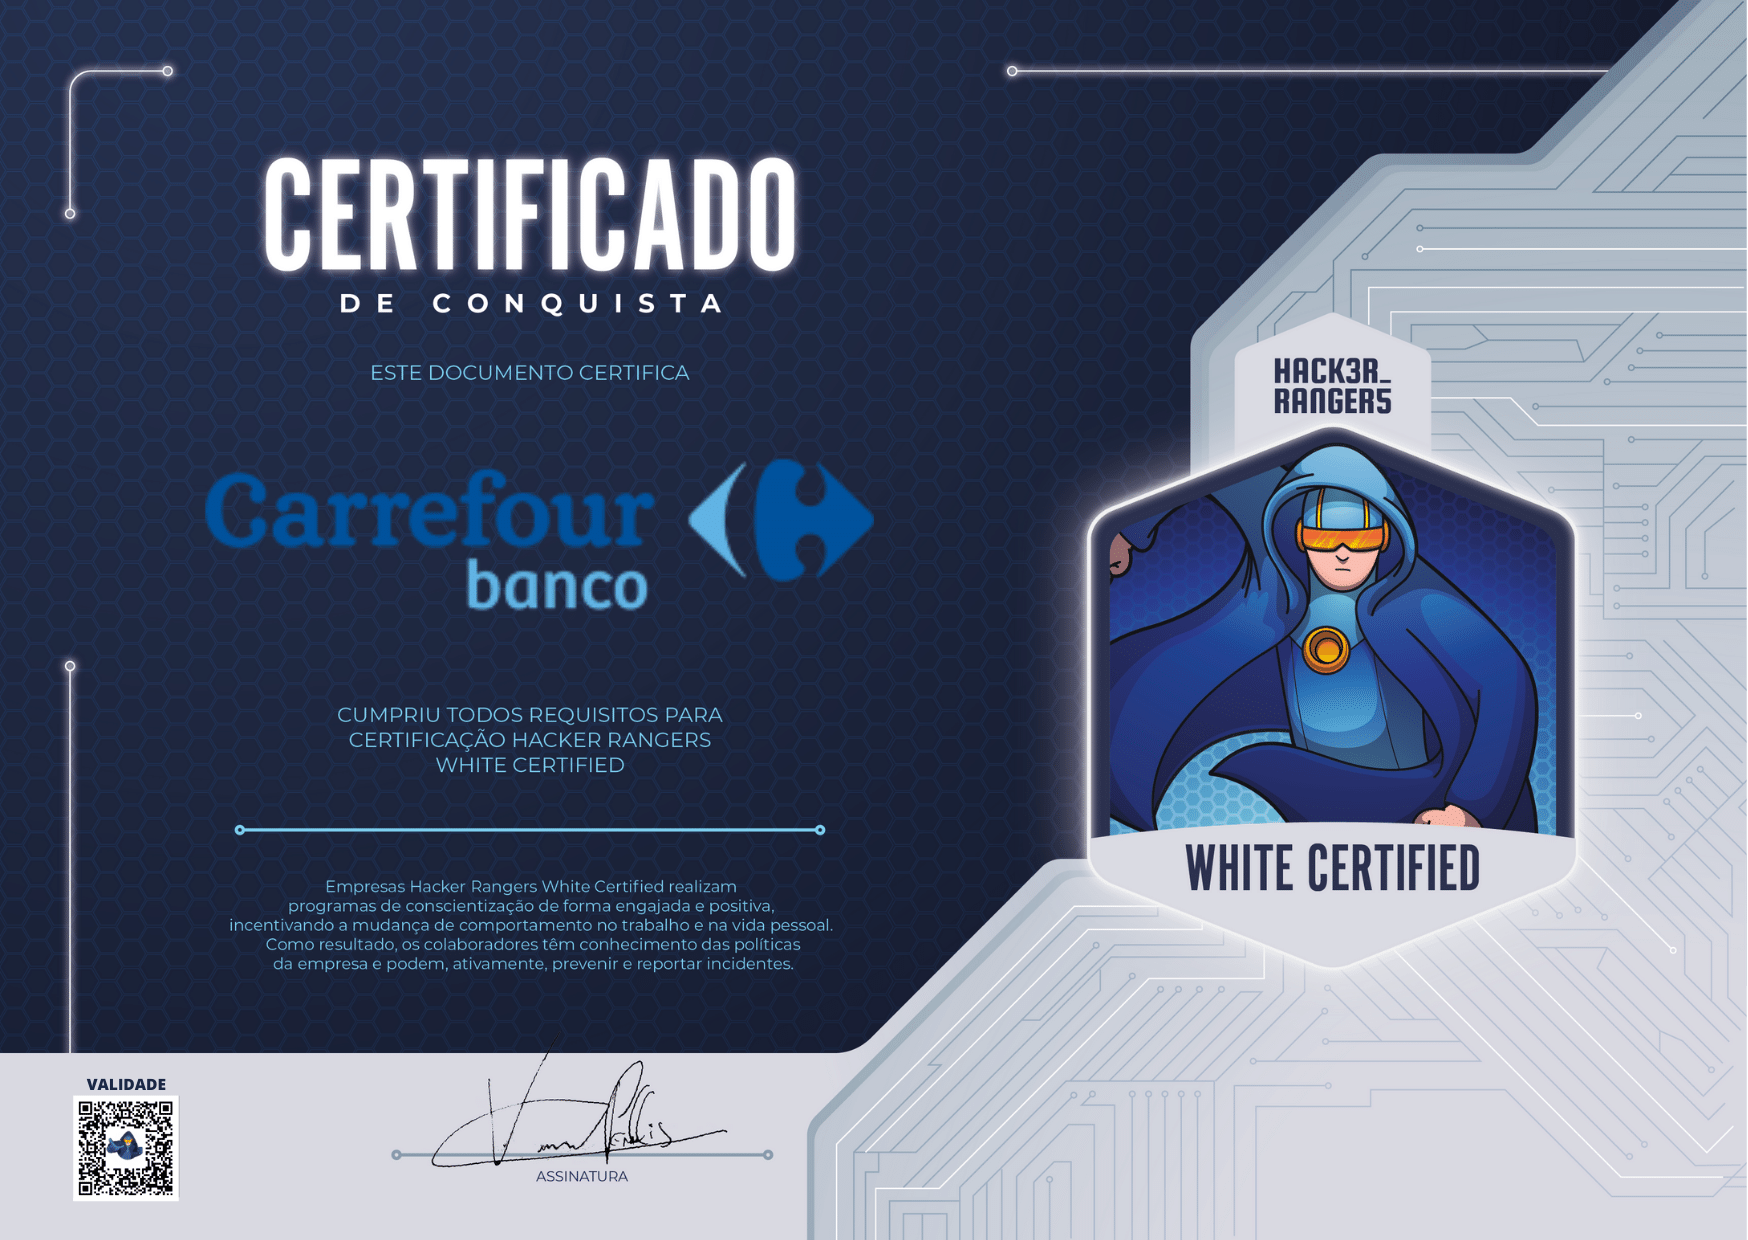 Banco Carrefour - Hacker Rangers White Certified